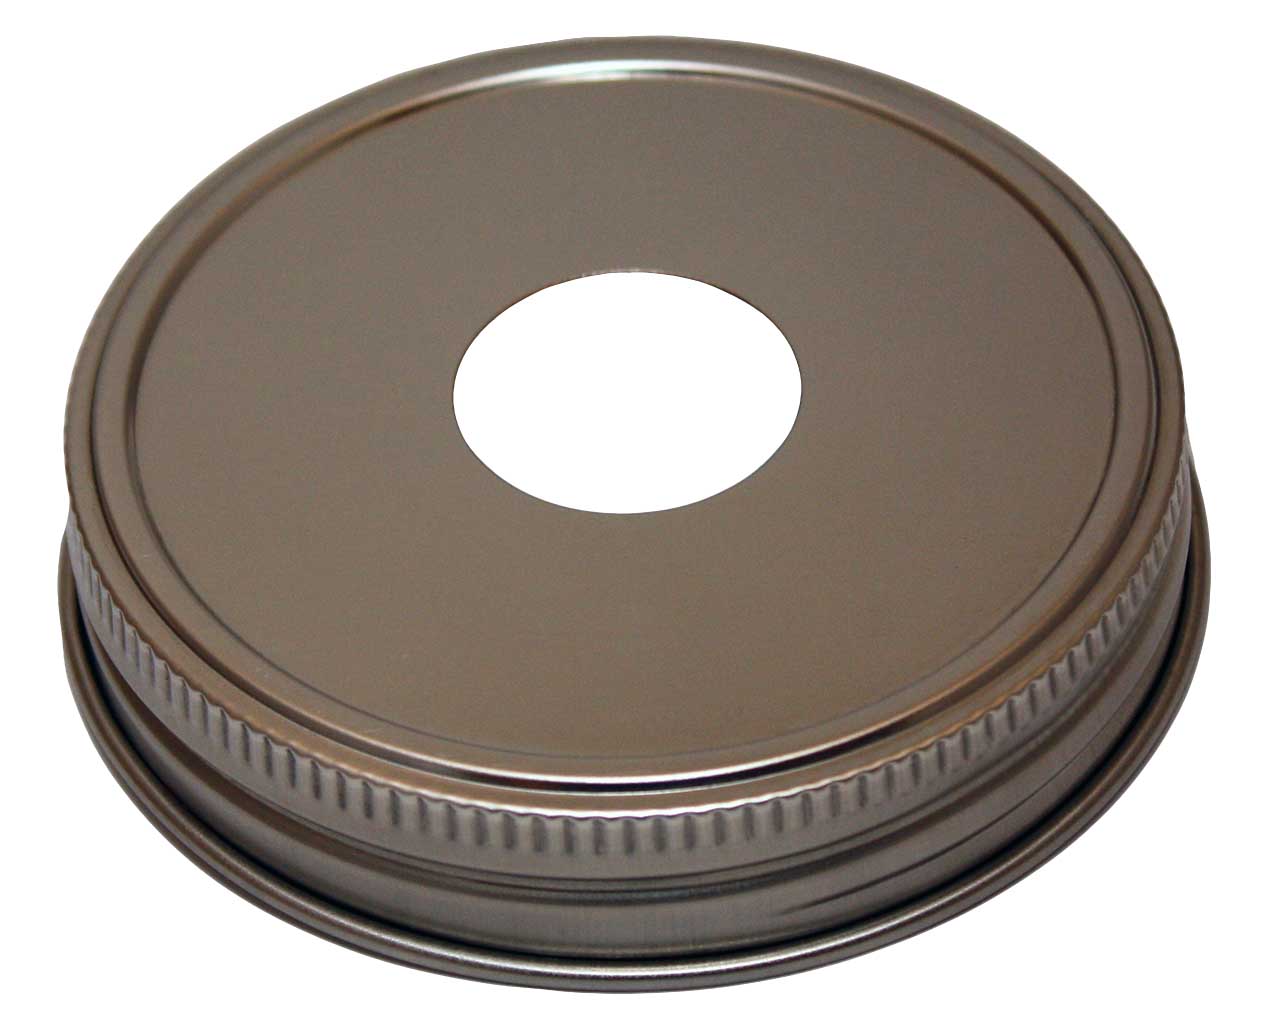 Stainless Steel Soap Pump Dispenser Lid Adapter (304) for Mason Jars